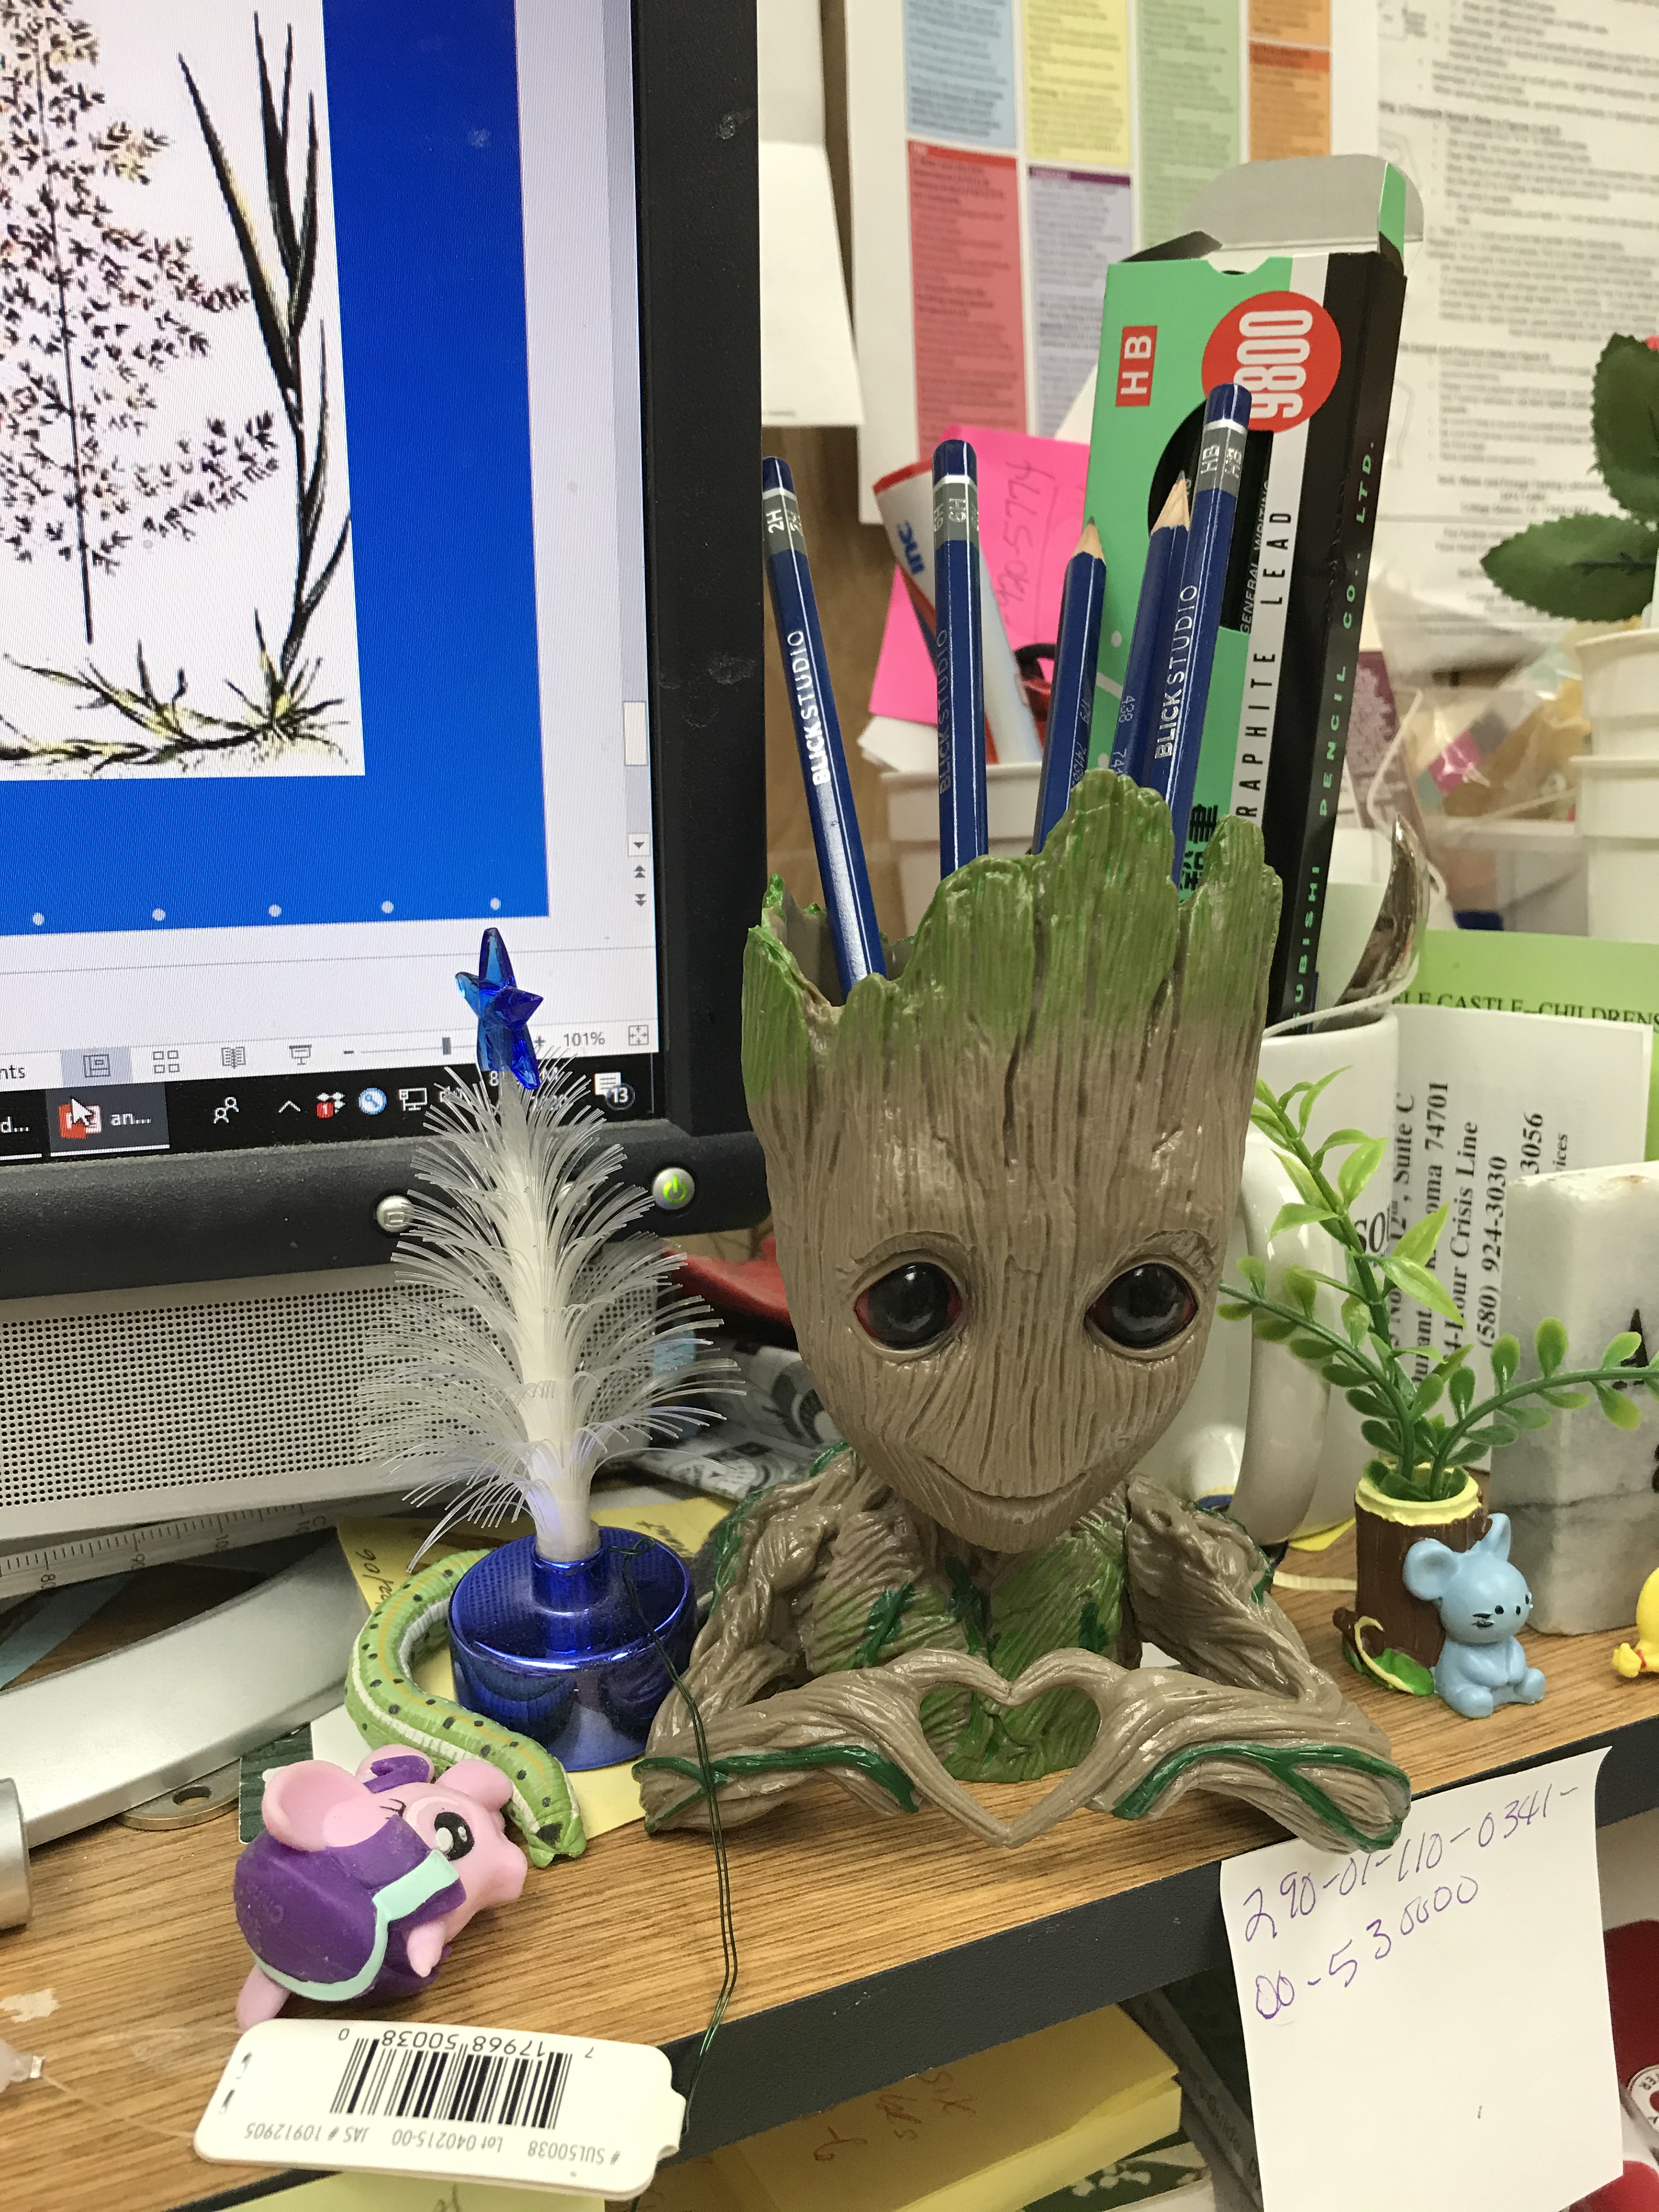 Groot at work